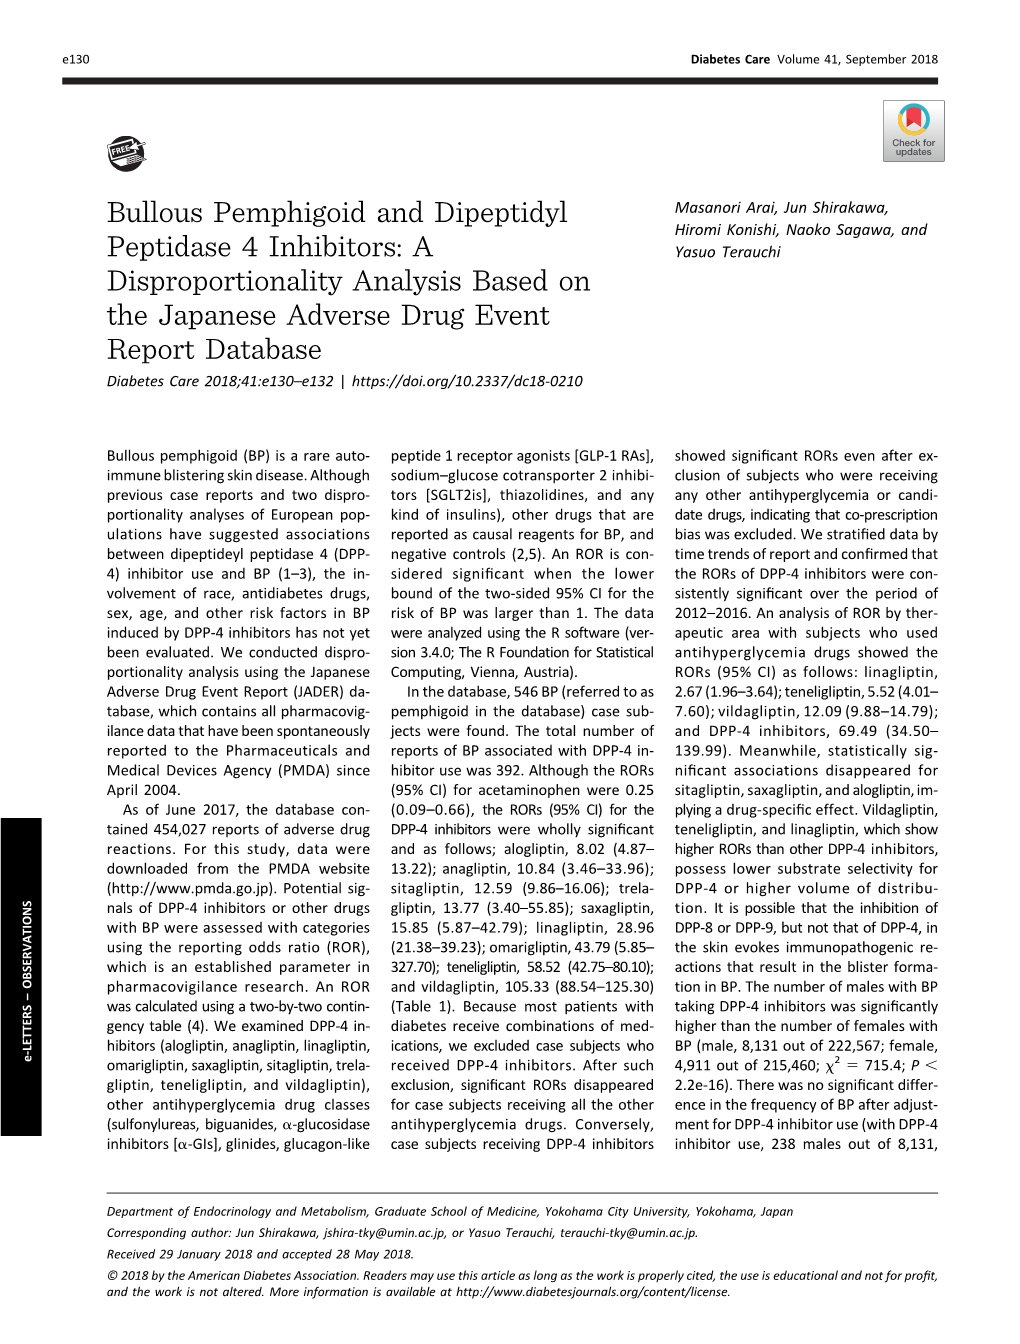 Bullous Pemphigoid and Dipeptidyl Peptidase 4 Inhibitors